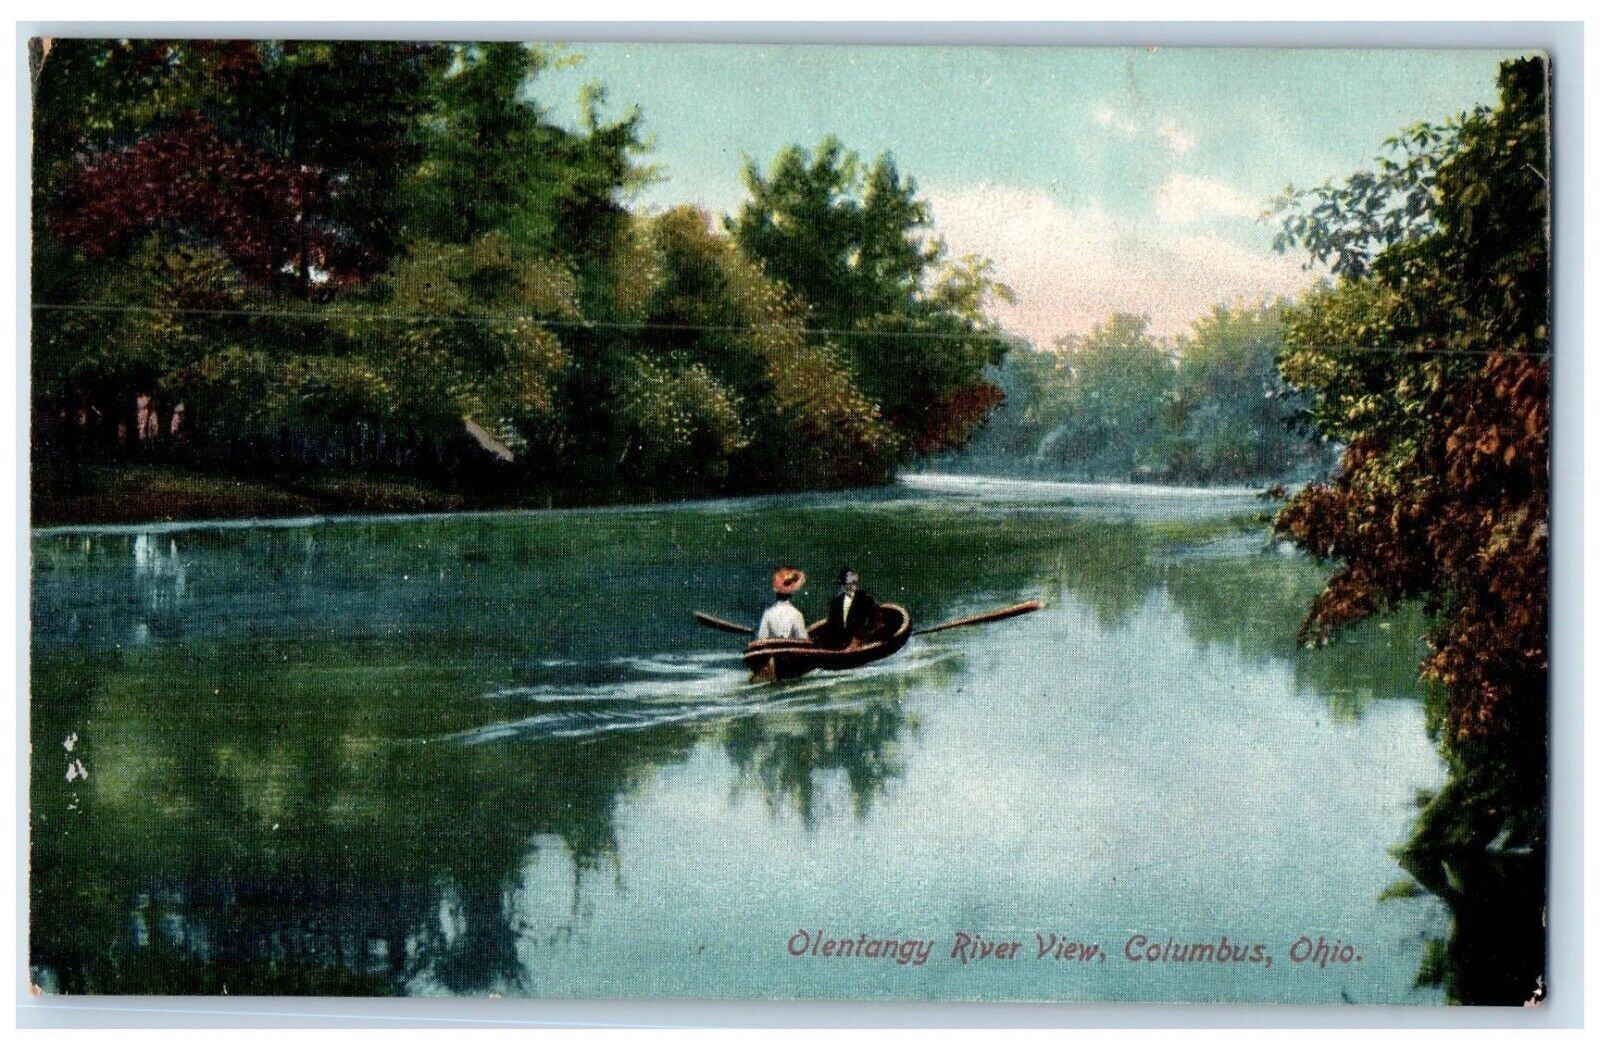 Olentangy River View Boat Sailing Scene Columbus Ohio OH Vintage Postcard